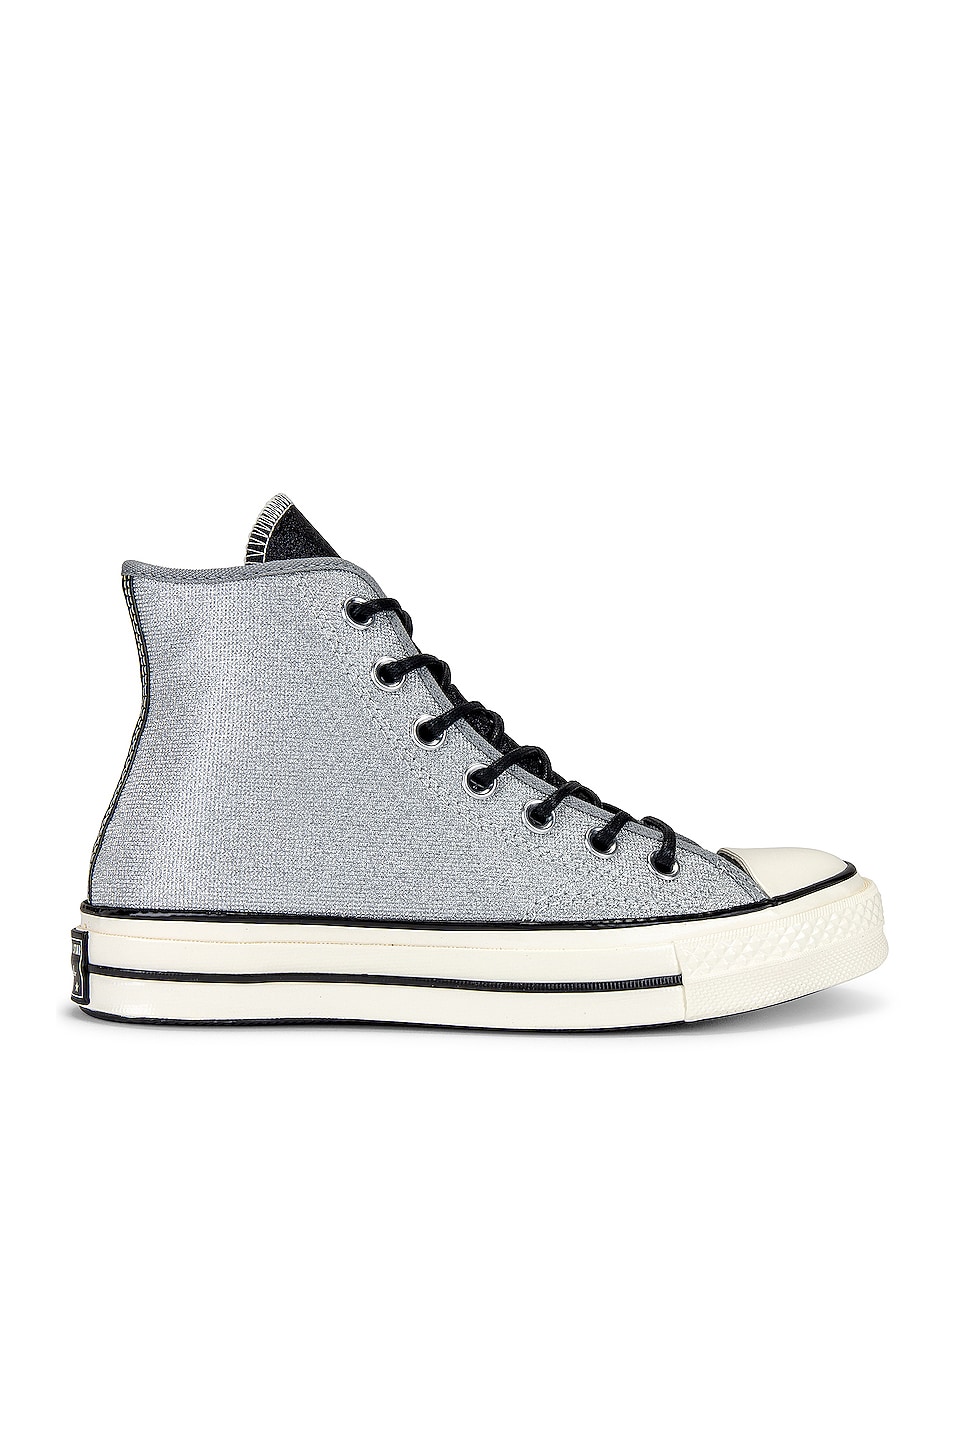 Converse Chuck 70 Glitter Sneaker in Silver, Black, & Egret | REVOLVE